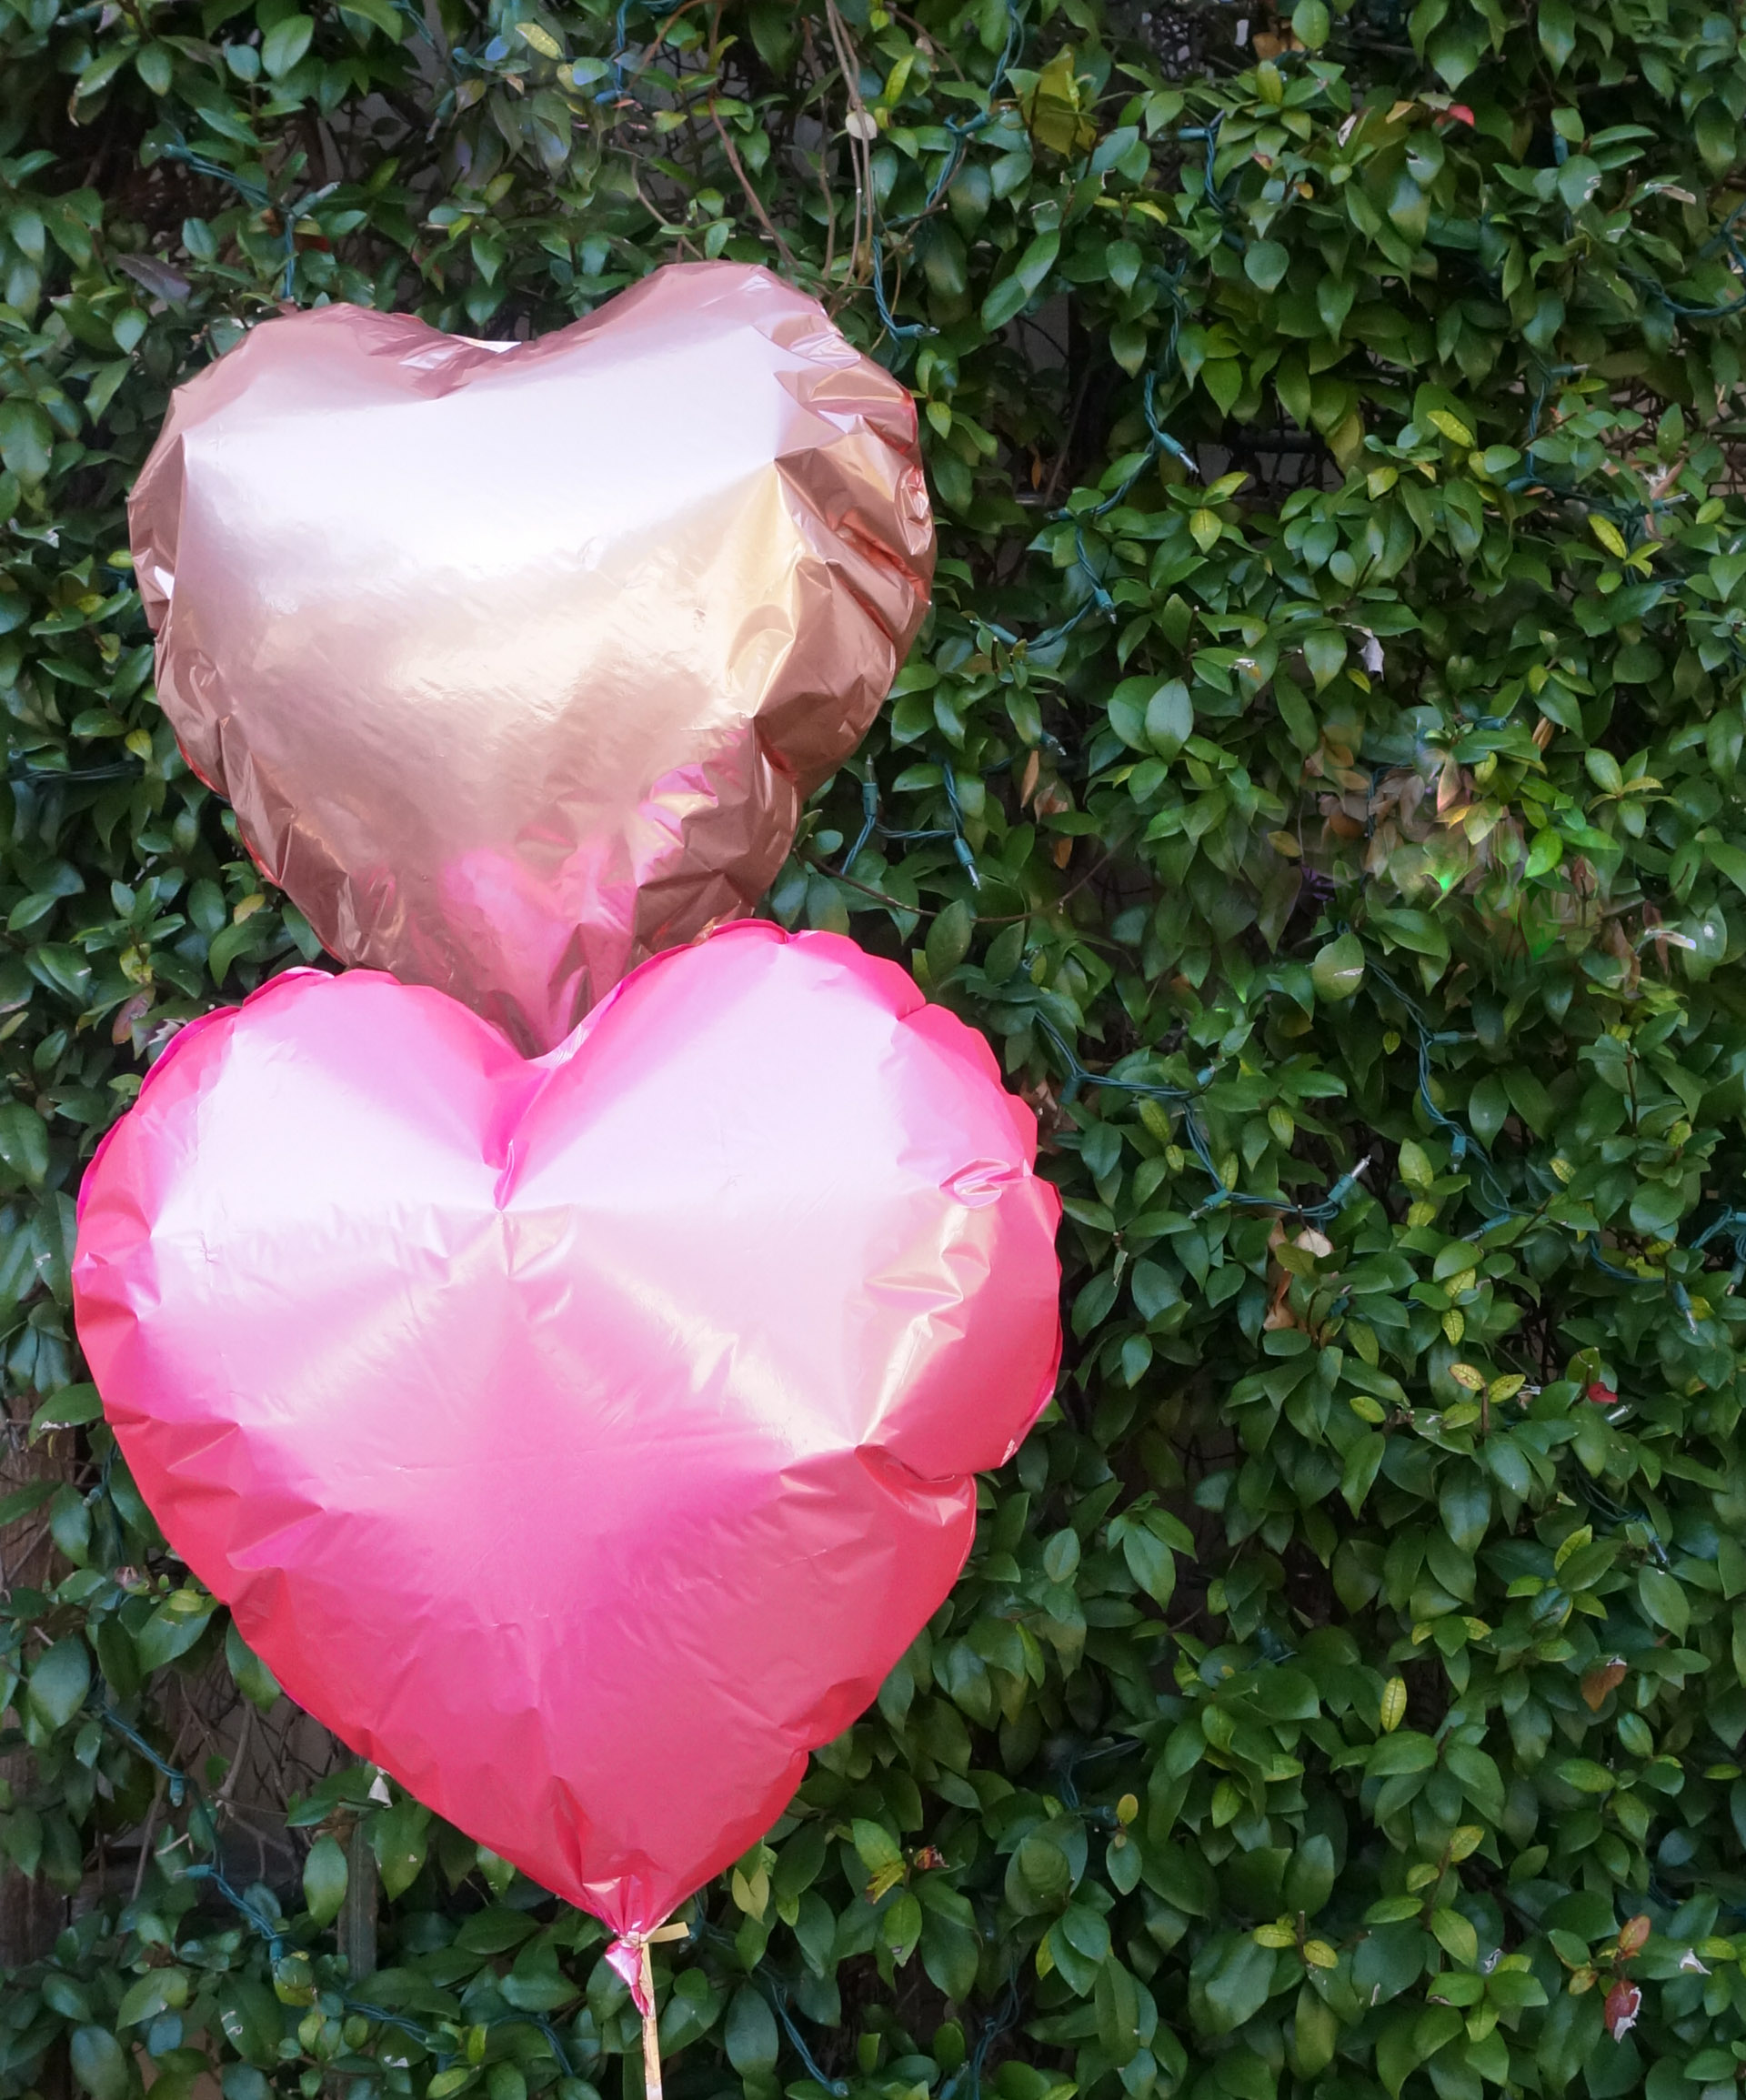 Festive-Valentines-Day-balloons